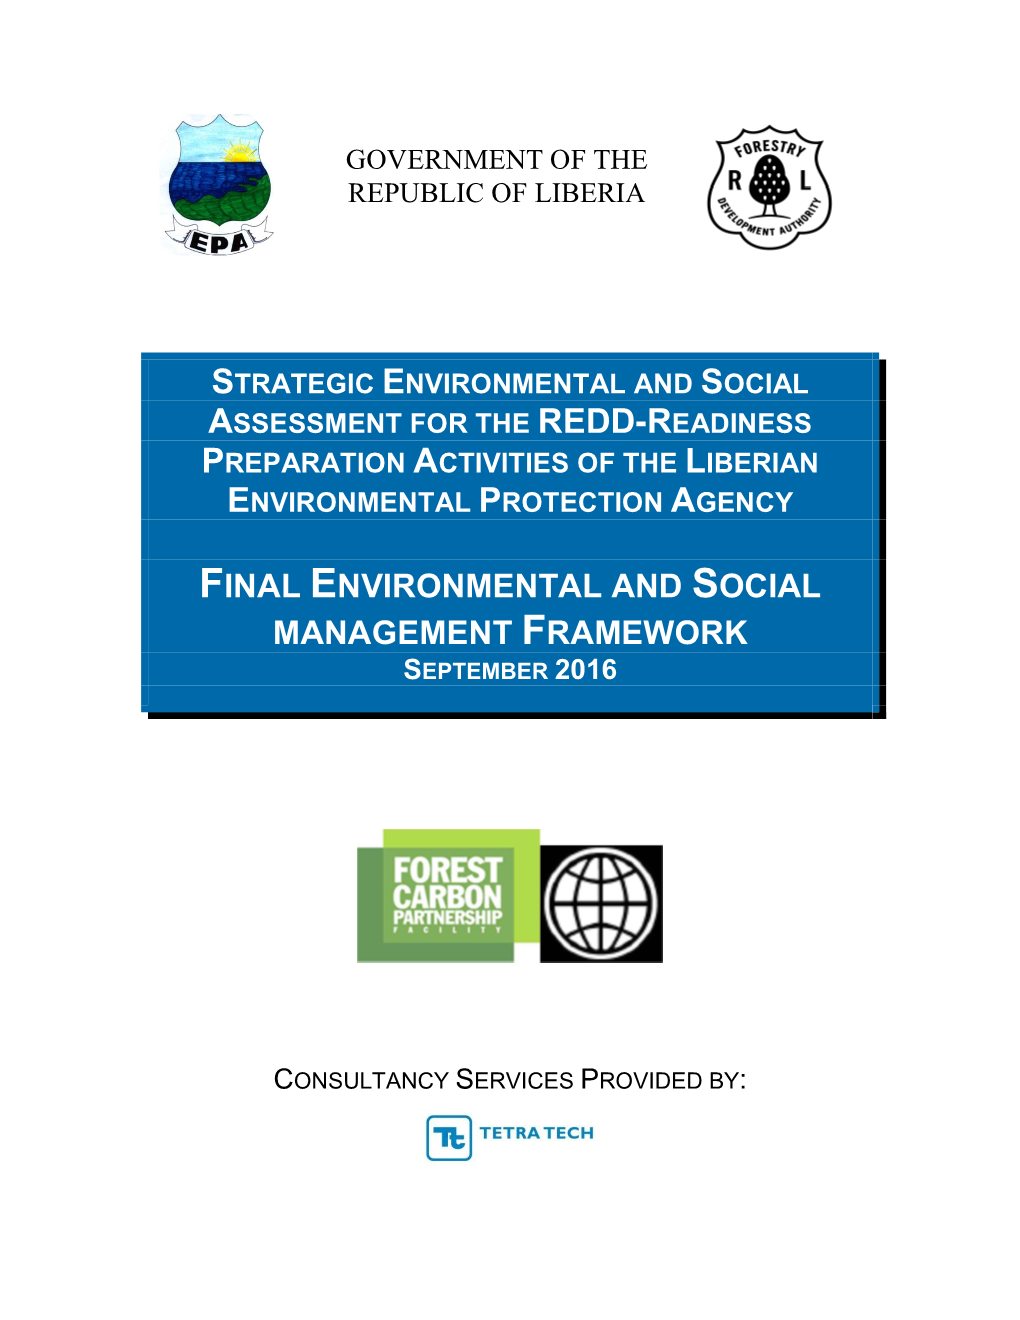 Final Environmental and Social Management Framework September 2016